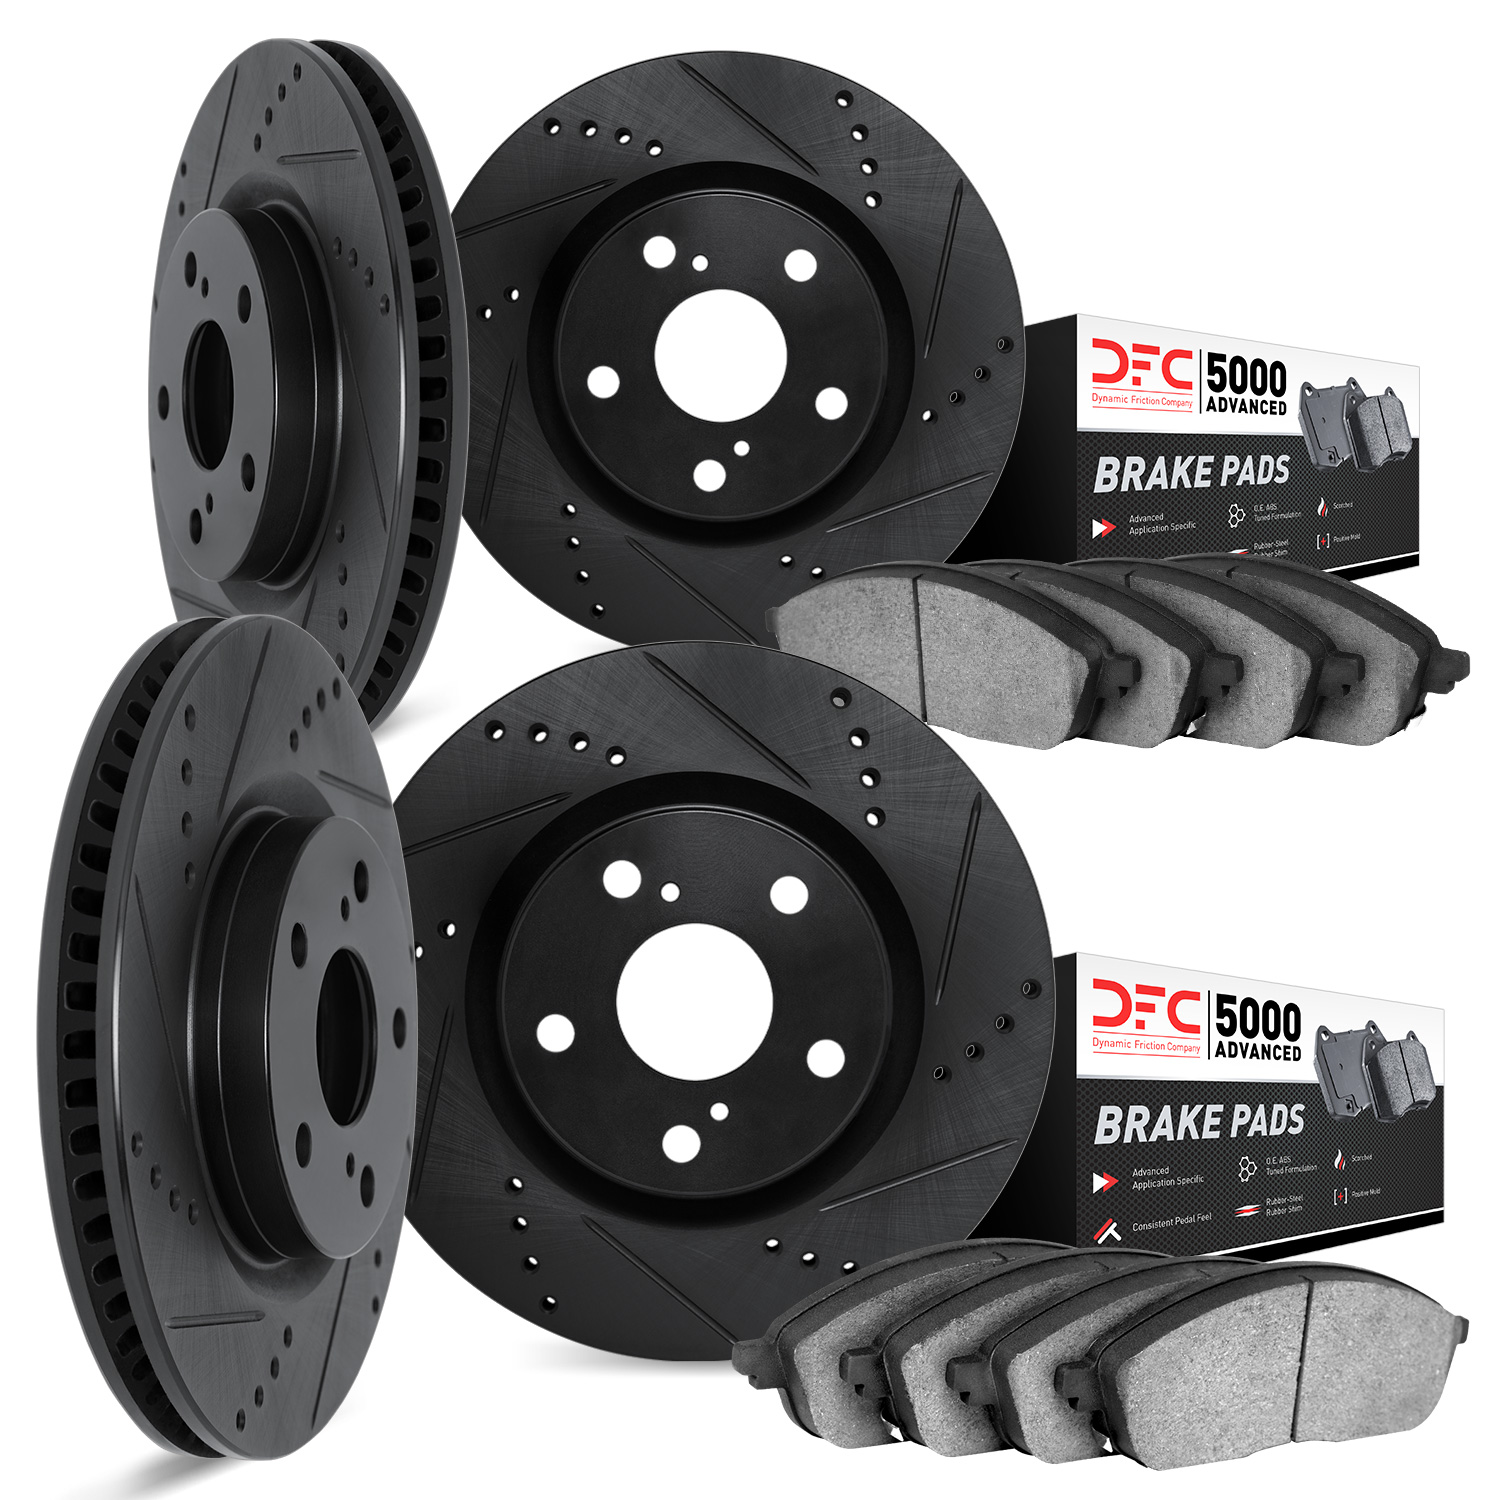 8504-54399 Drilled/Slotted Brake Rotors w/5000 Advanced Brake Pads Kit [Black], 2013-2016 Ford/Lincoln/Mercury/Mazda, Position: